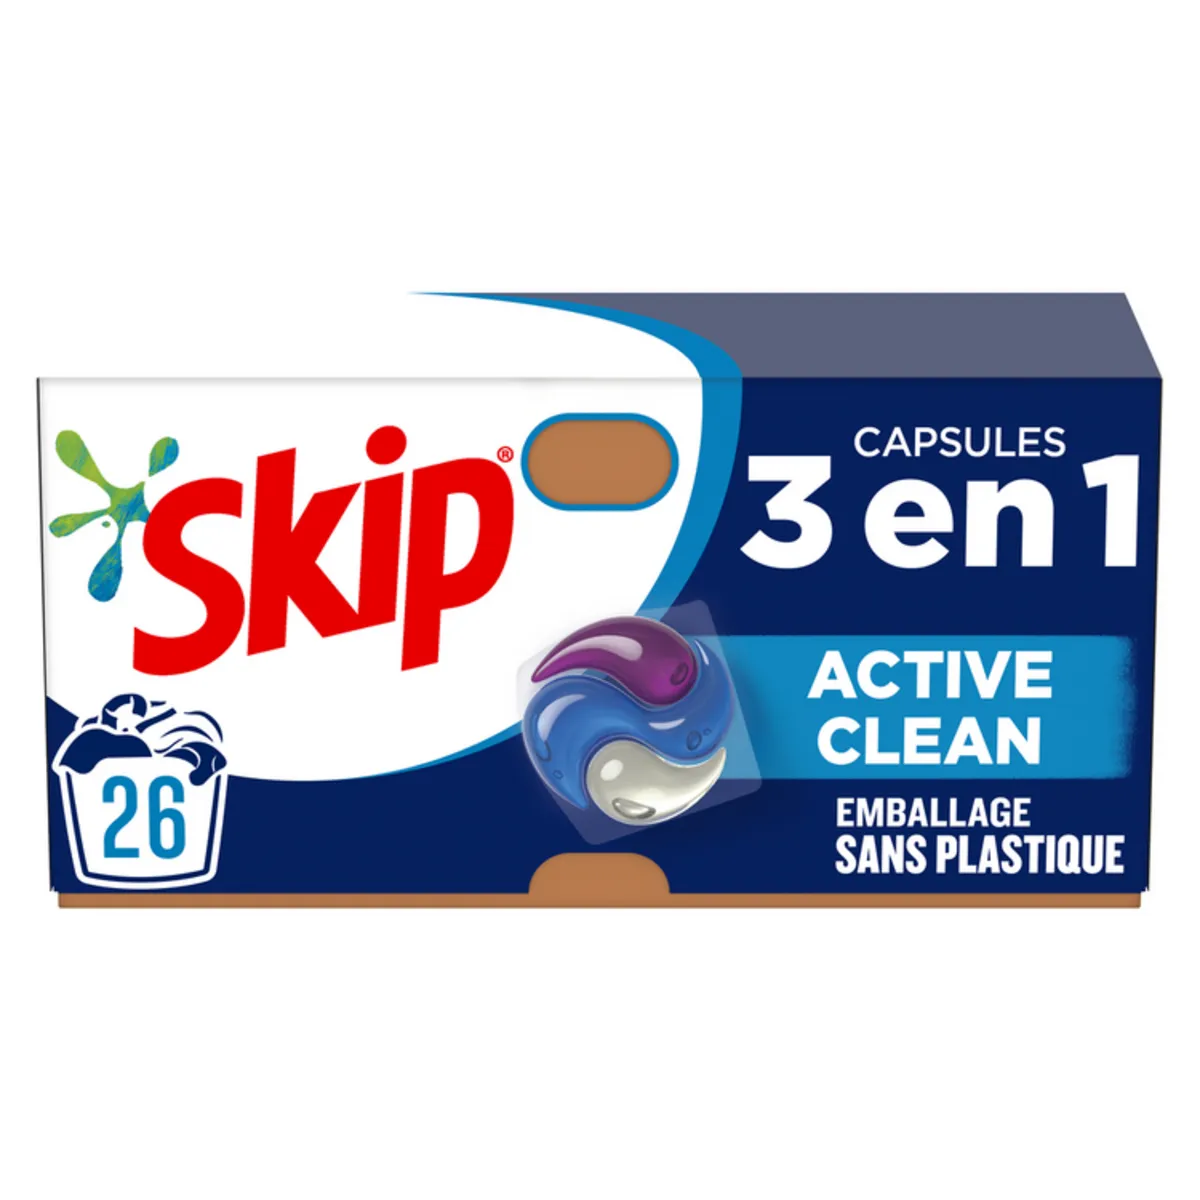 lessive capsule 3 en 1 active clean skip(1)